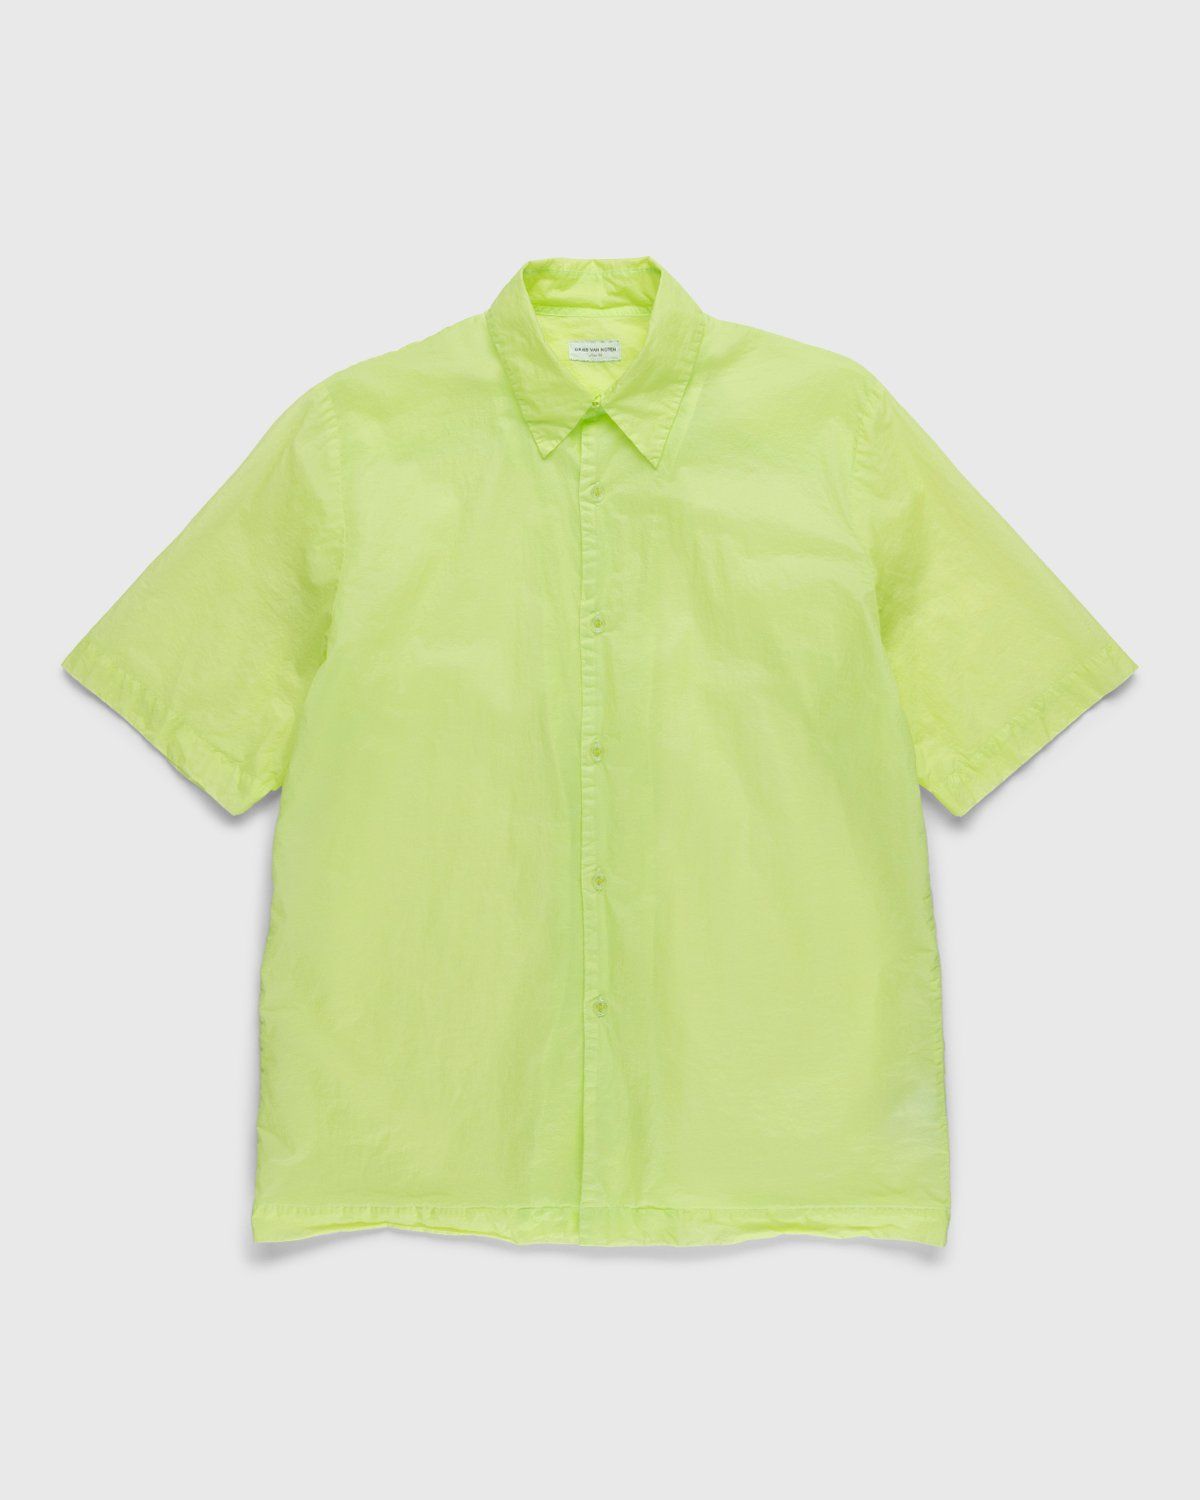 Dries Van Noten – Clasen Shirt Lime - Image 1